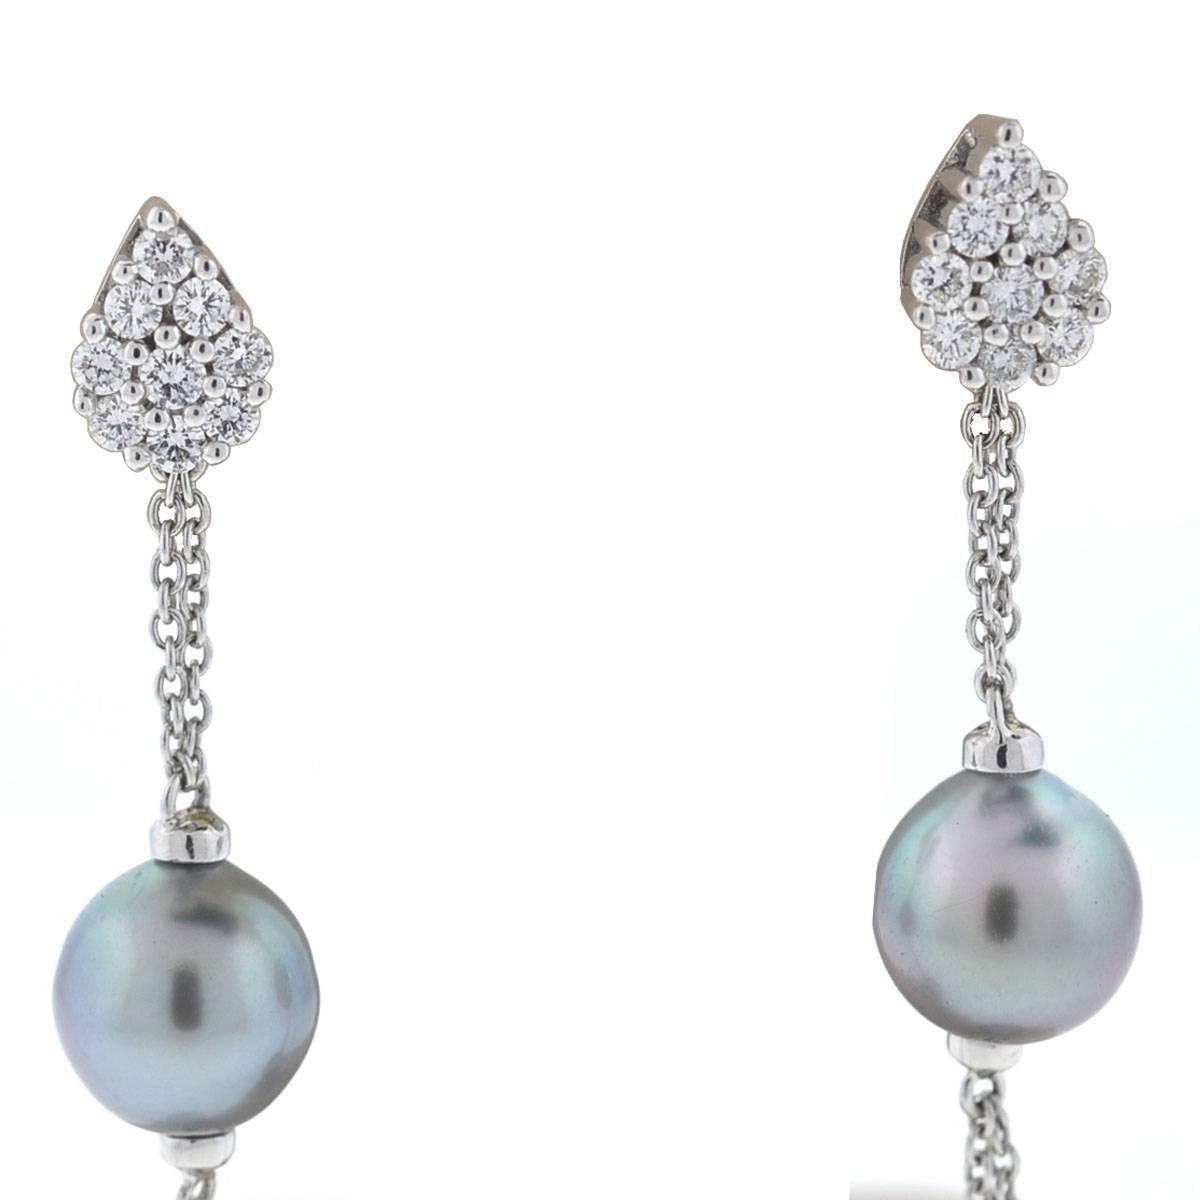 Company - Damiani 
Style - Ninfea Drop Earrings
Metal - 18k White Gold
Stones - Tahitian Pearls (approx. 10mm ) Diamonds (approx. 0.65cts)
Backs - Butterfly Backs
Measurement - 2.25